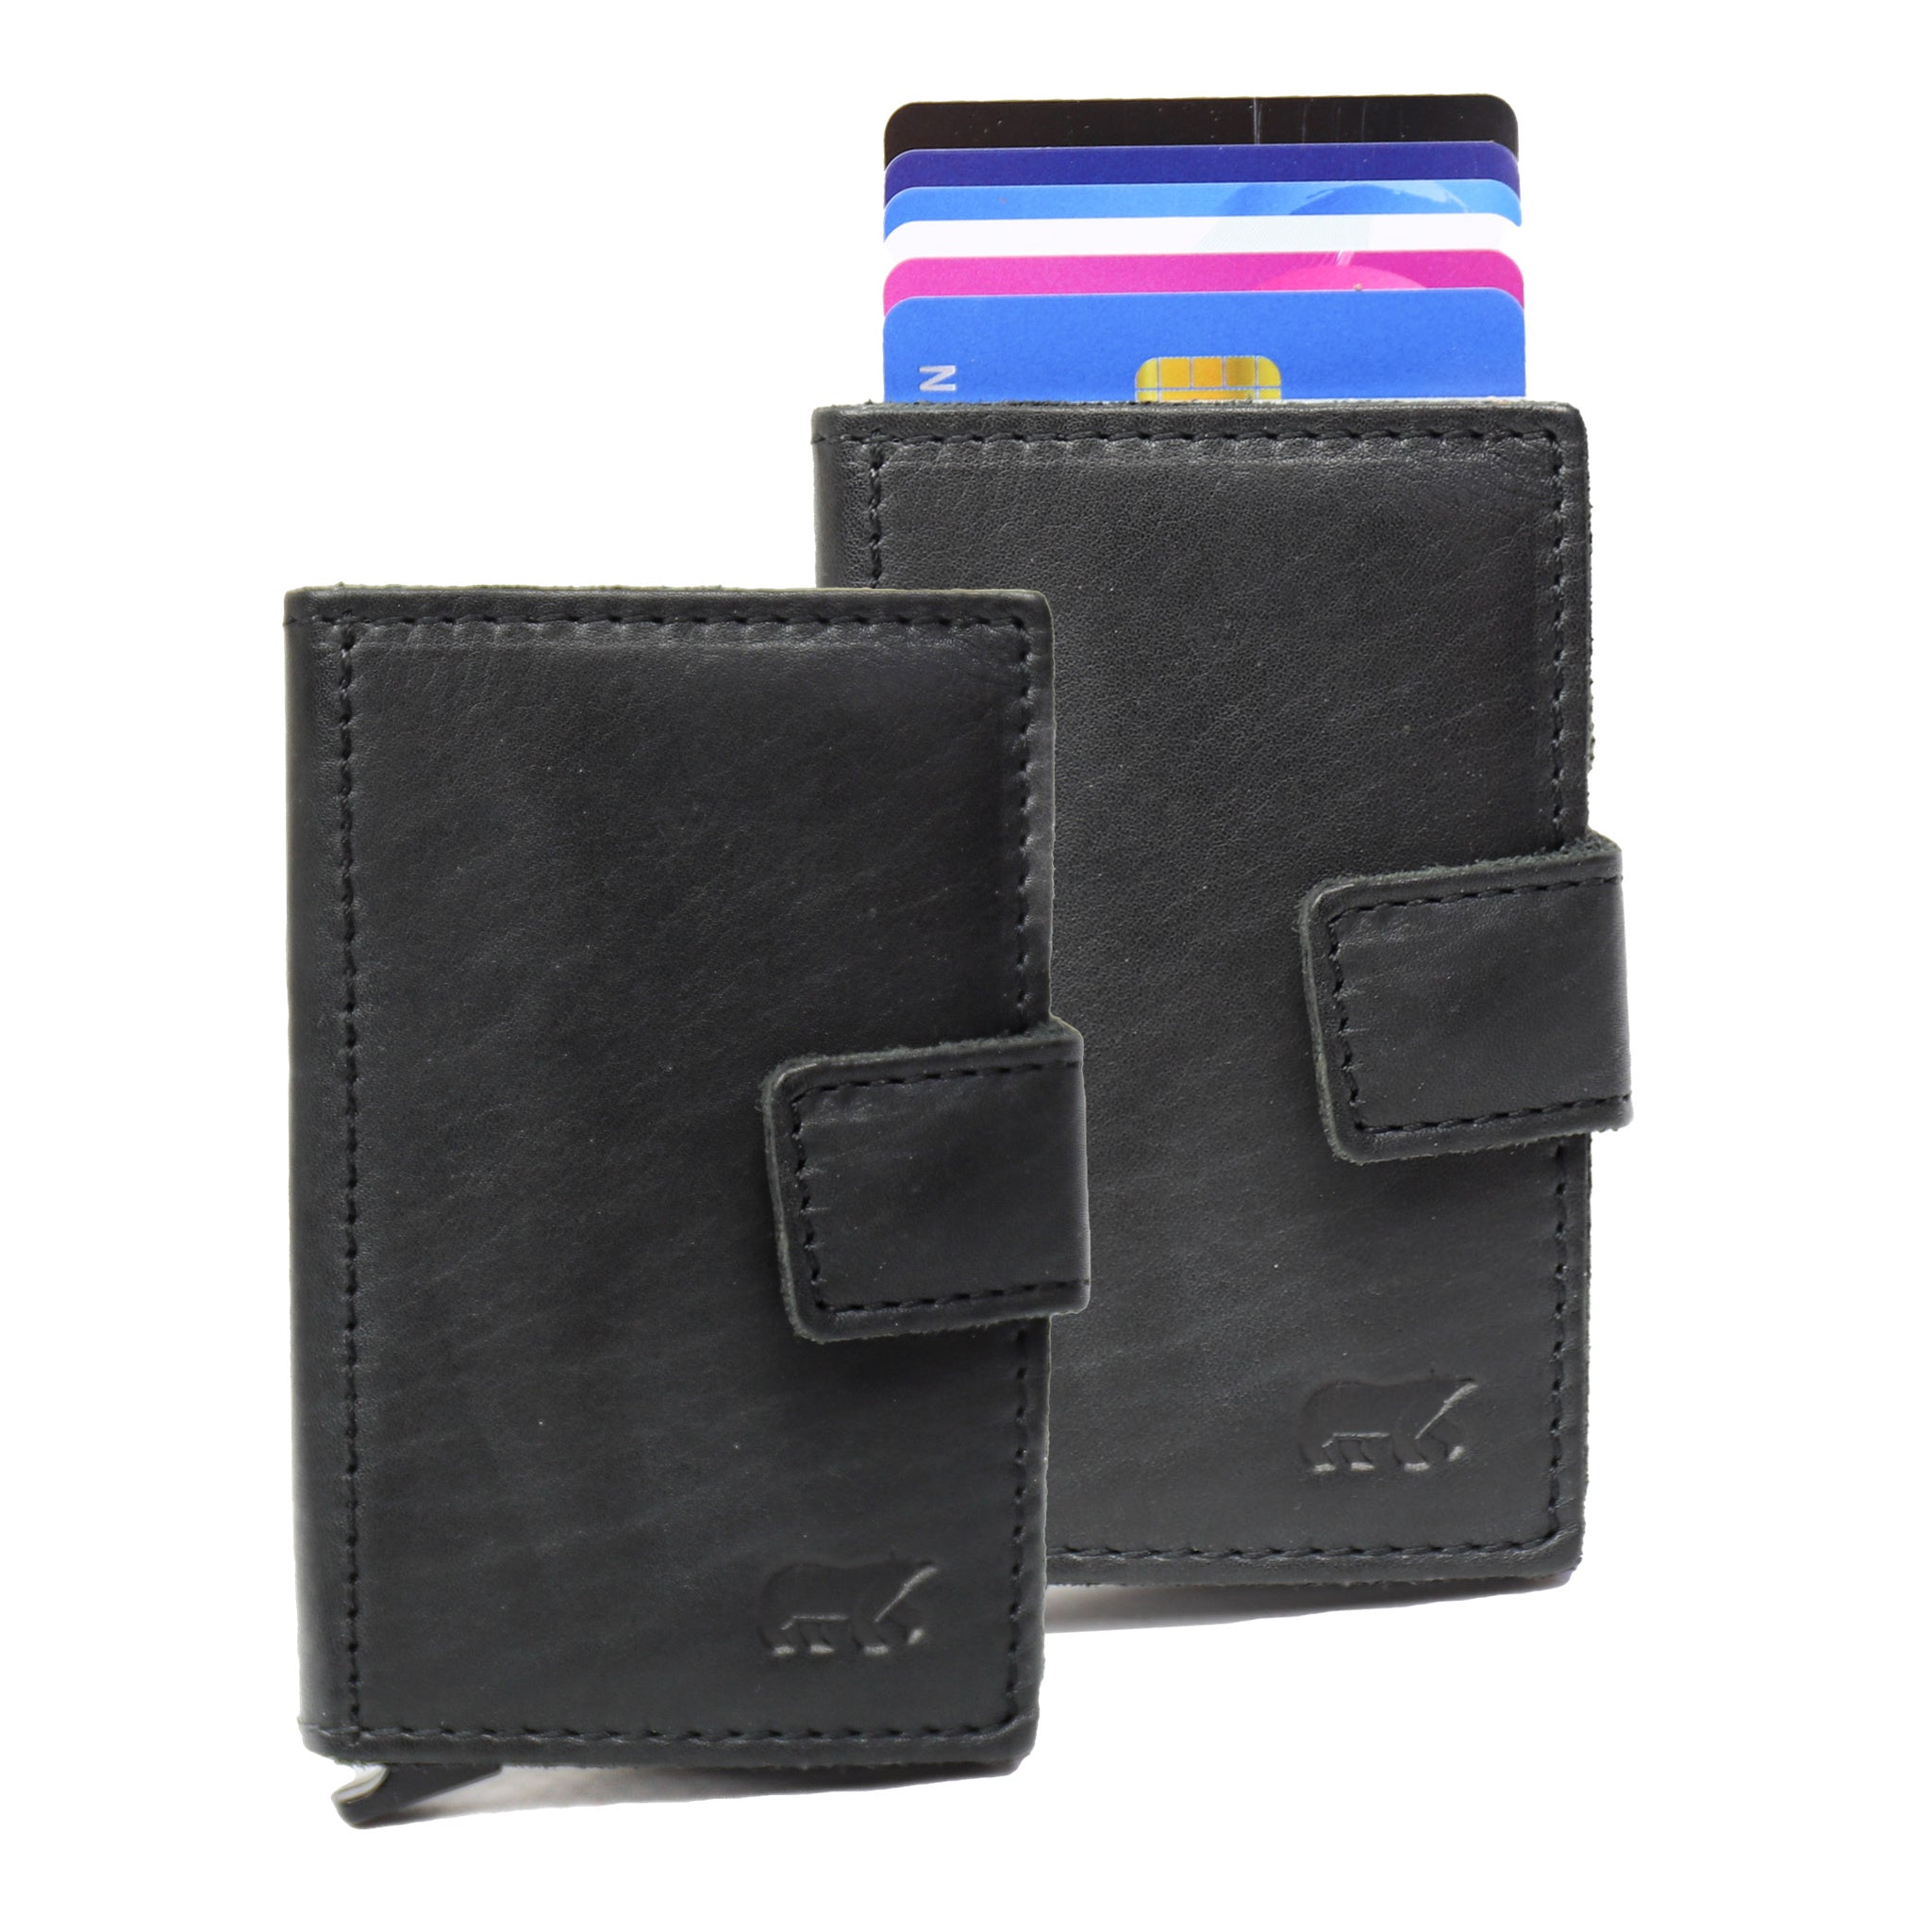 Card holder 'Pip' black - CL 15254